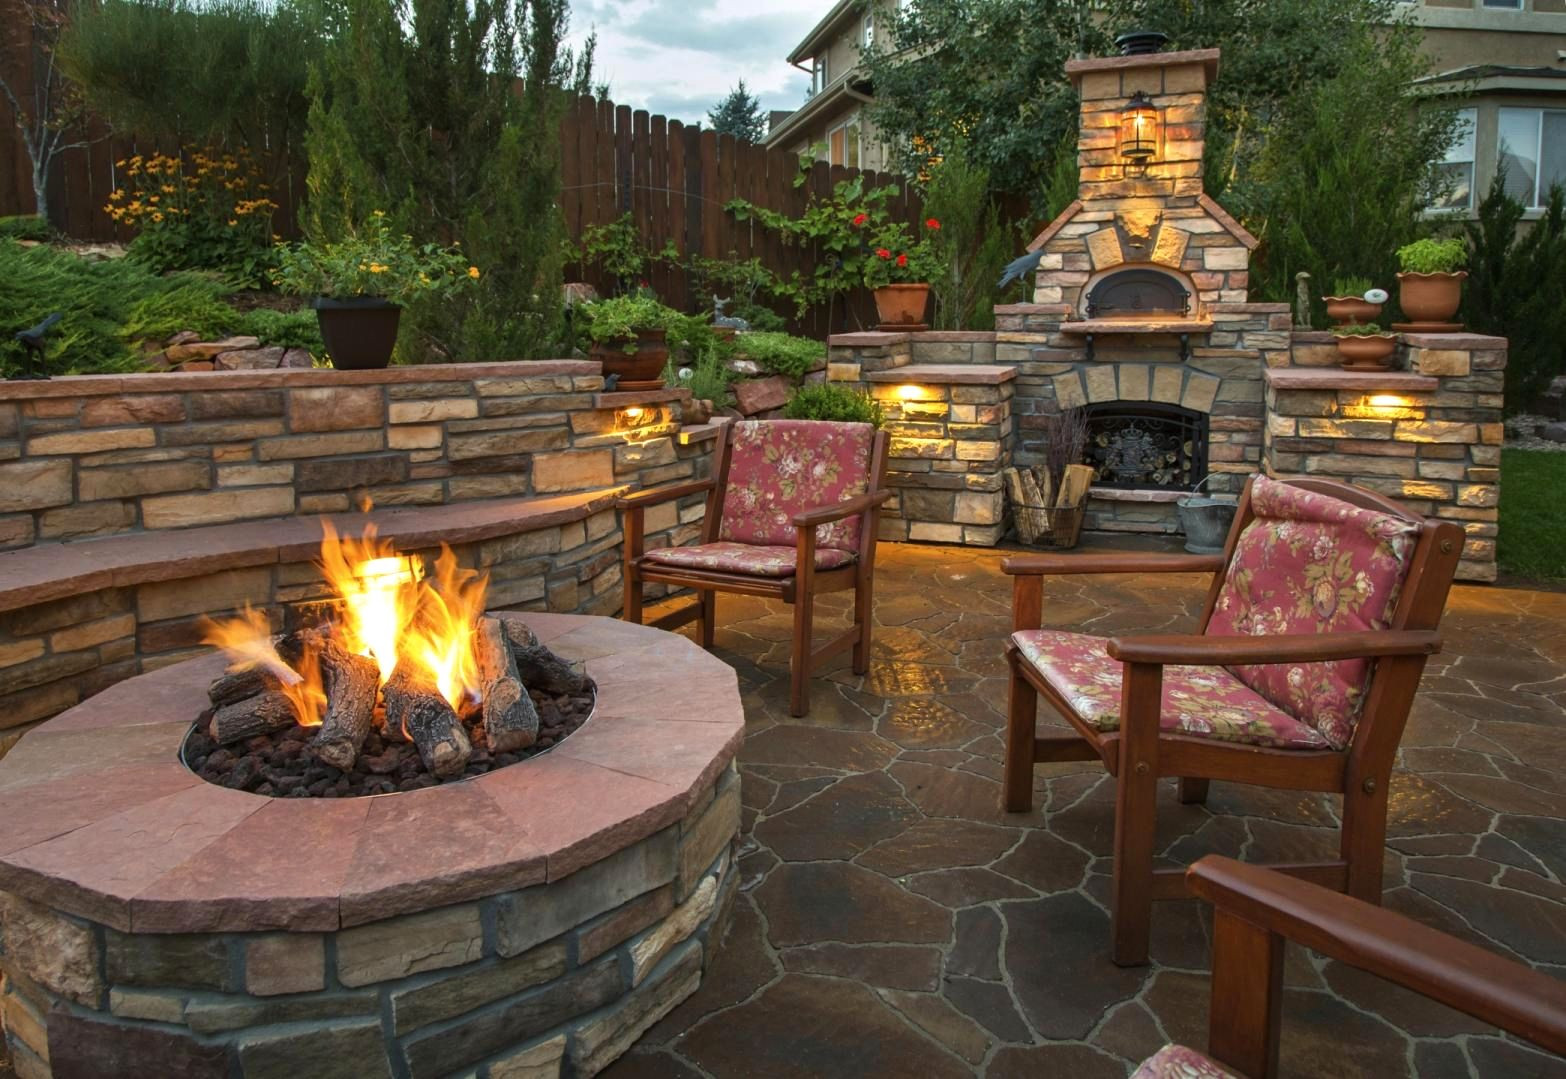 Backyard Design With Fire Pit
 Backyard Landscaping Ideas With Fire Pit Backyard